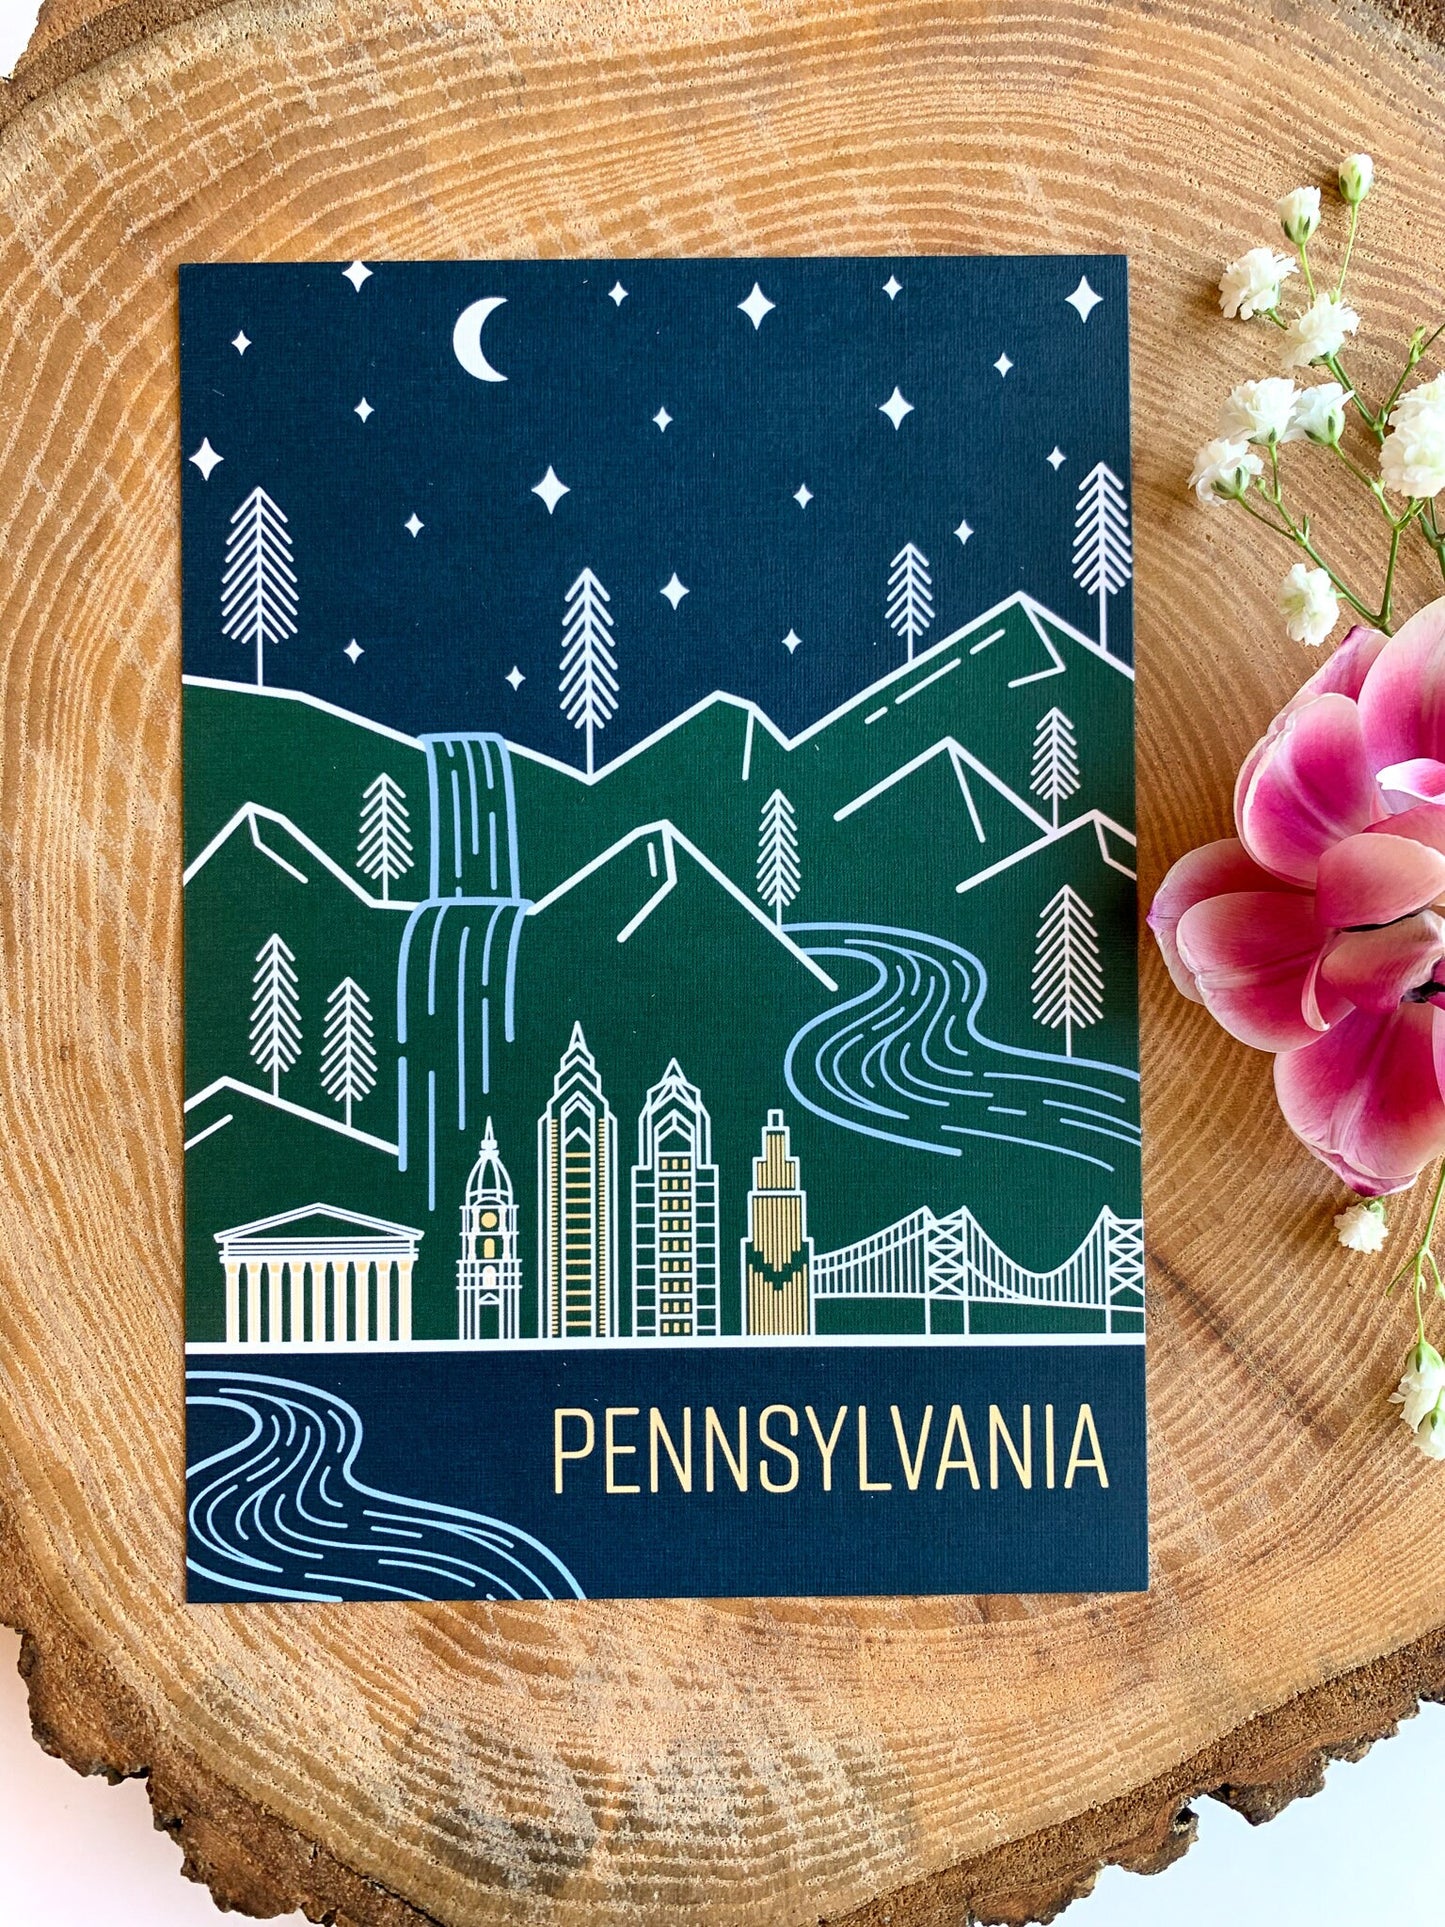 Pennsylvania State Travel Postcard